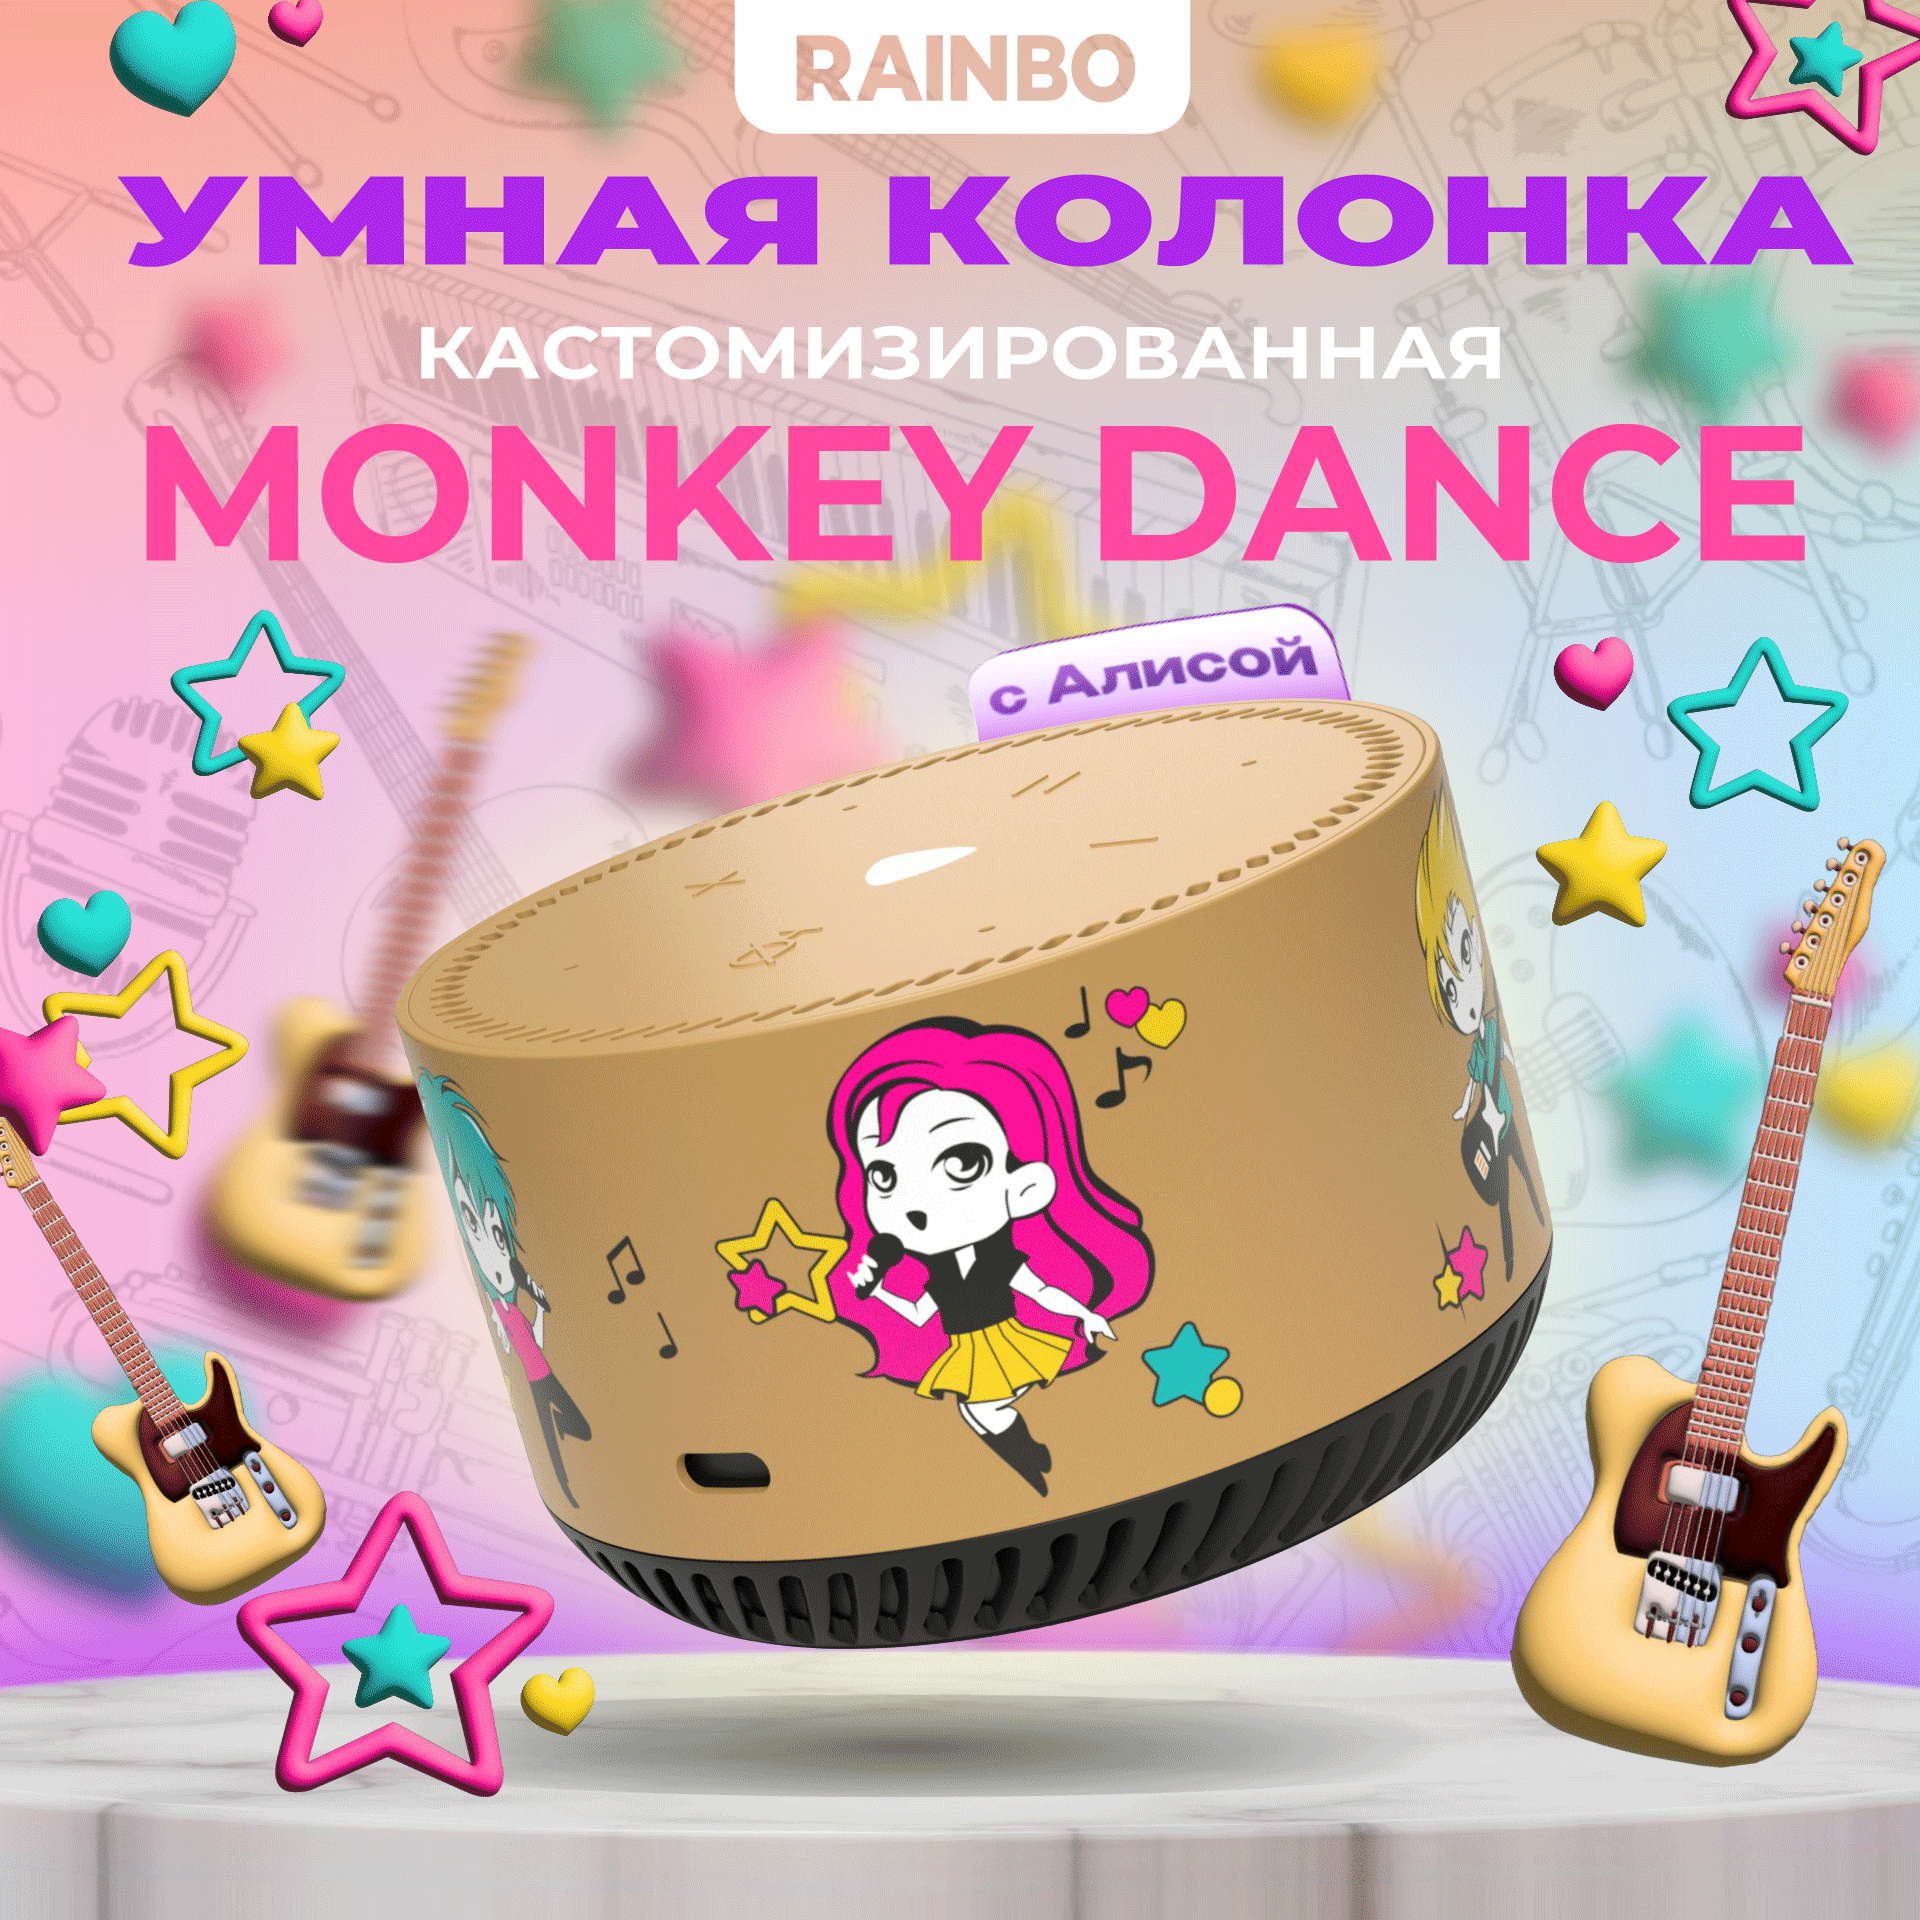 Умная колонка RAINBO Яндекс Станция Лайт "Monkey Dance"